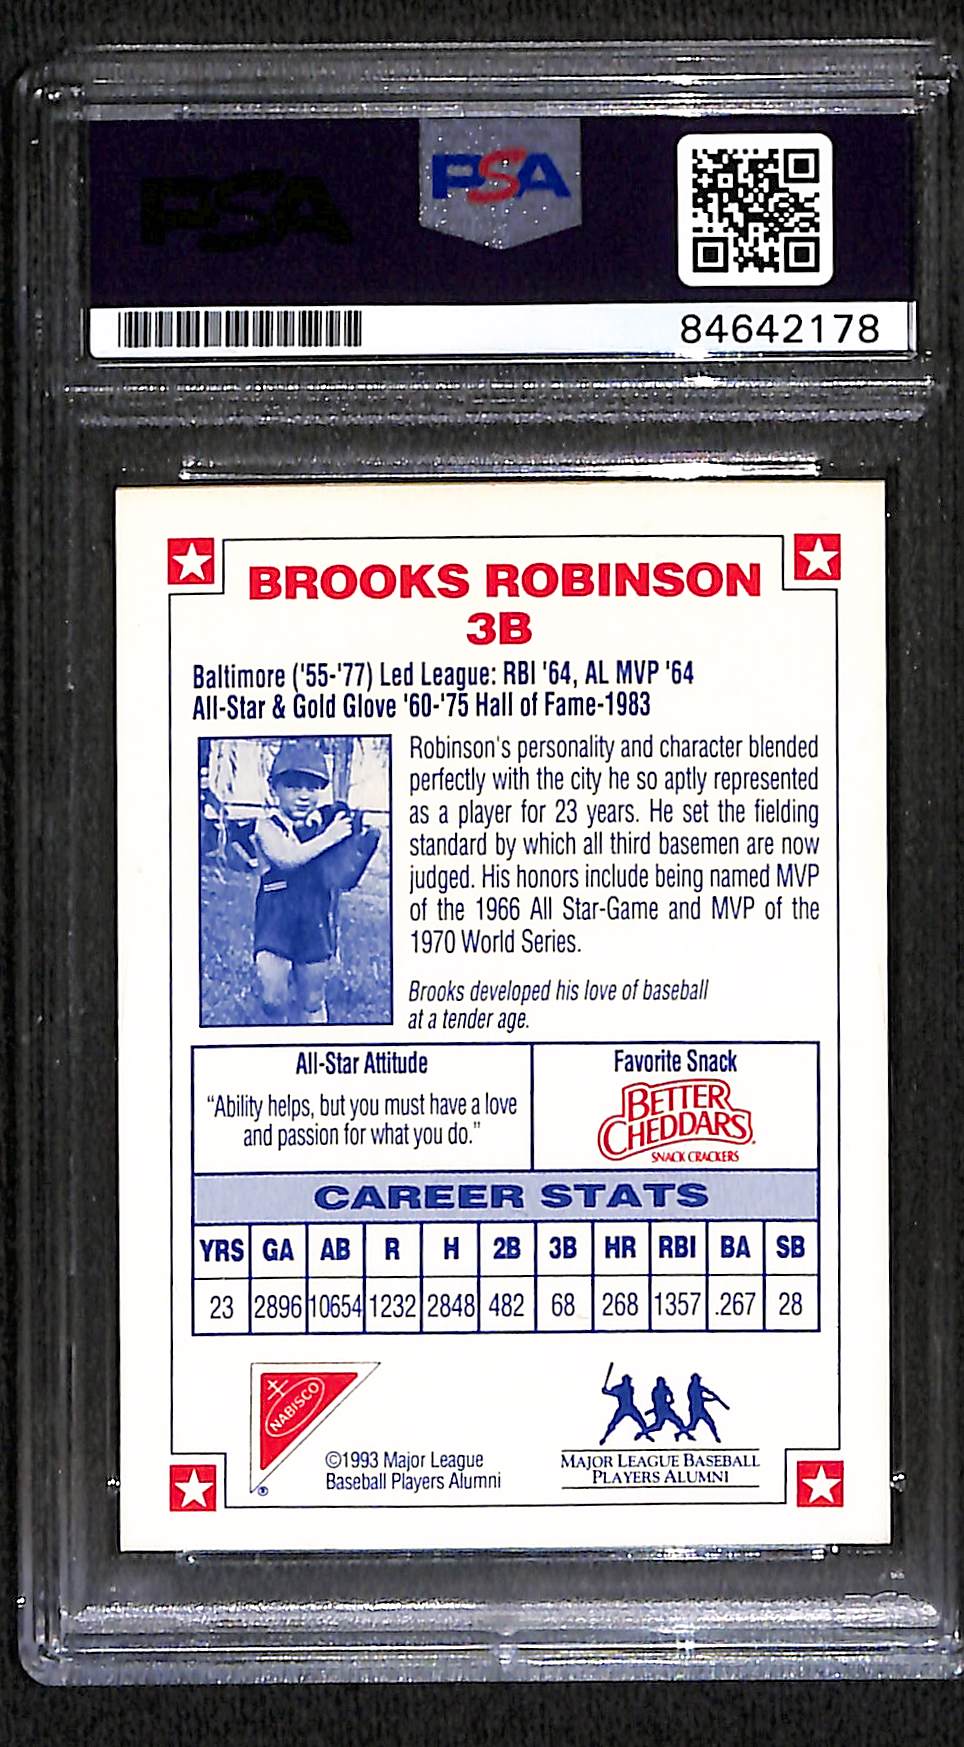 1993 NABISCO BROOKS ROBINSON AUTO CARD PSA DNA (2178)